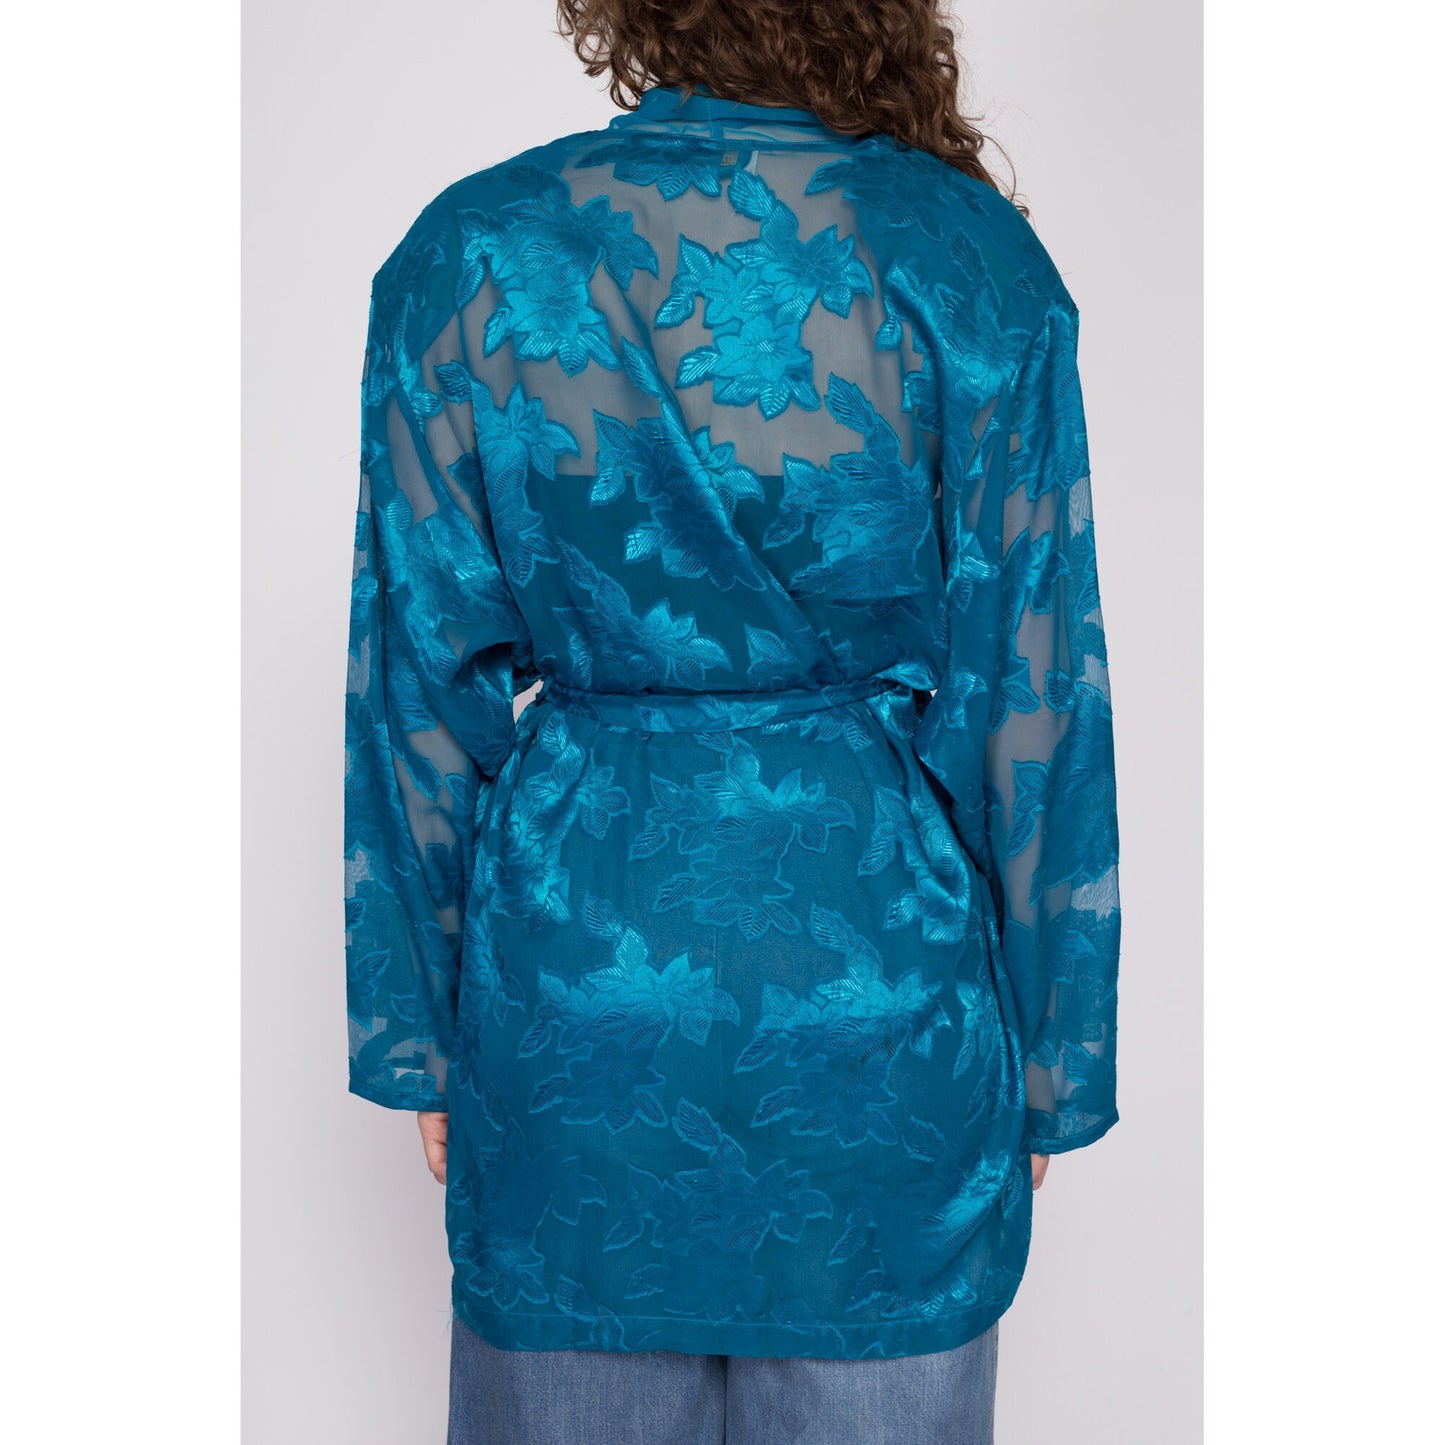 L| 90s Victoria's Secret Sheer Blue Jacquard Robe - Large | Vintage Floral Chiffon Boho Loungewear Kimono